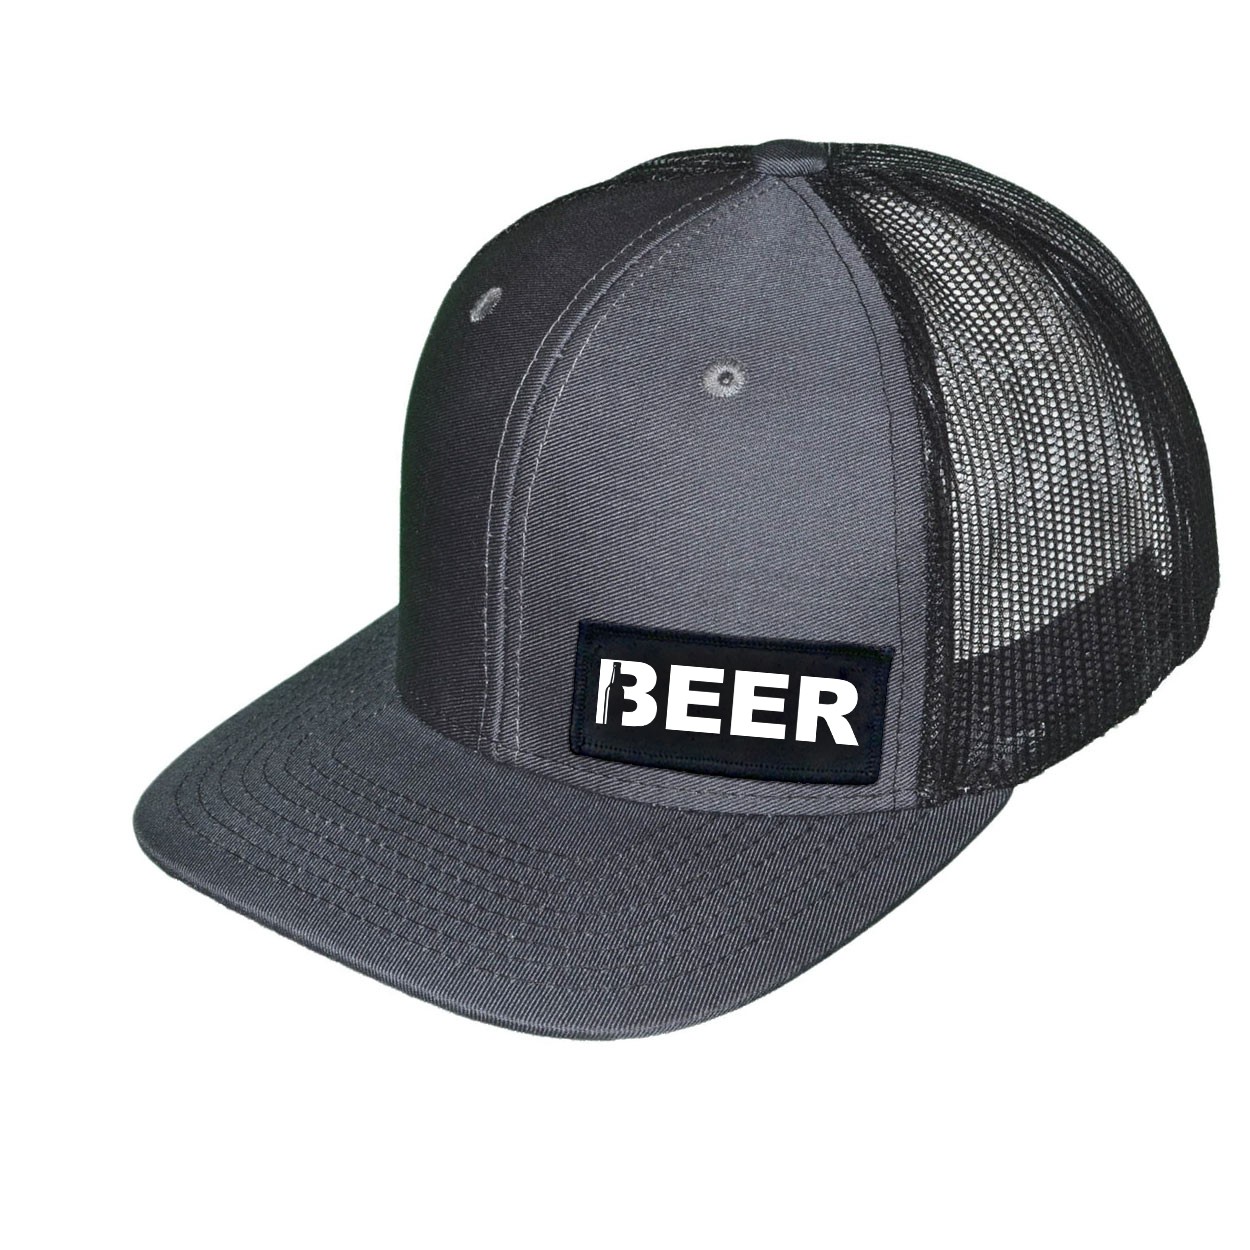 Beer Bottle Logo Night Out Woven Patch Snapback Trucker Hat Dark Gray/Black